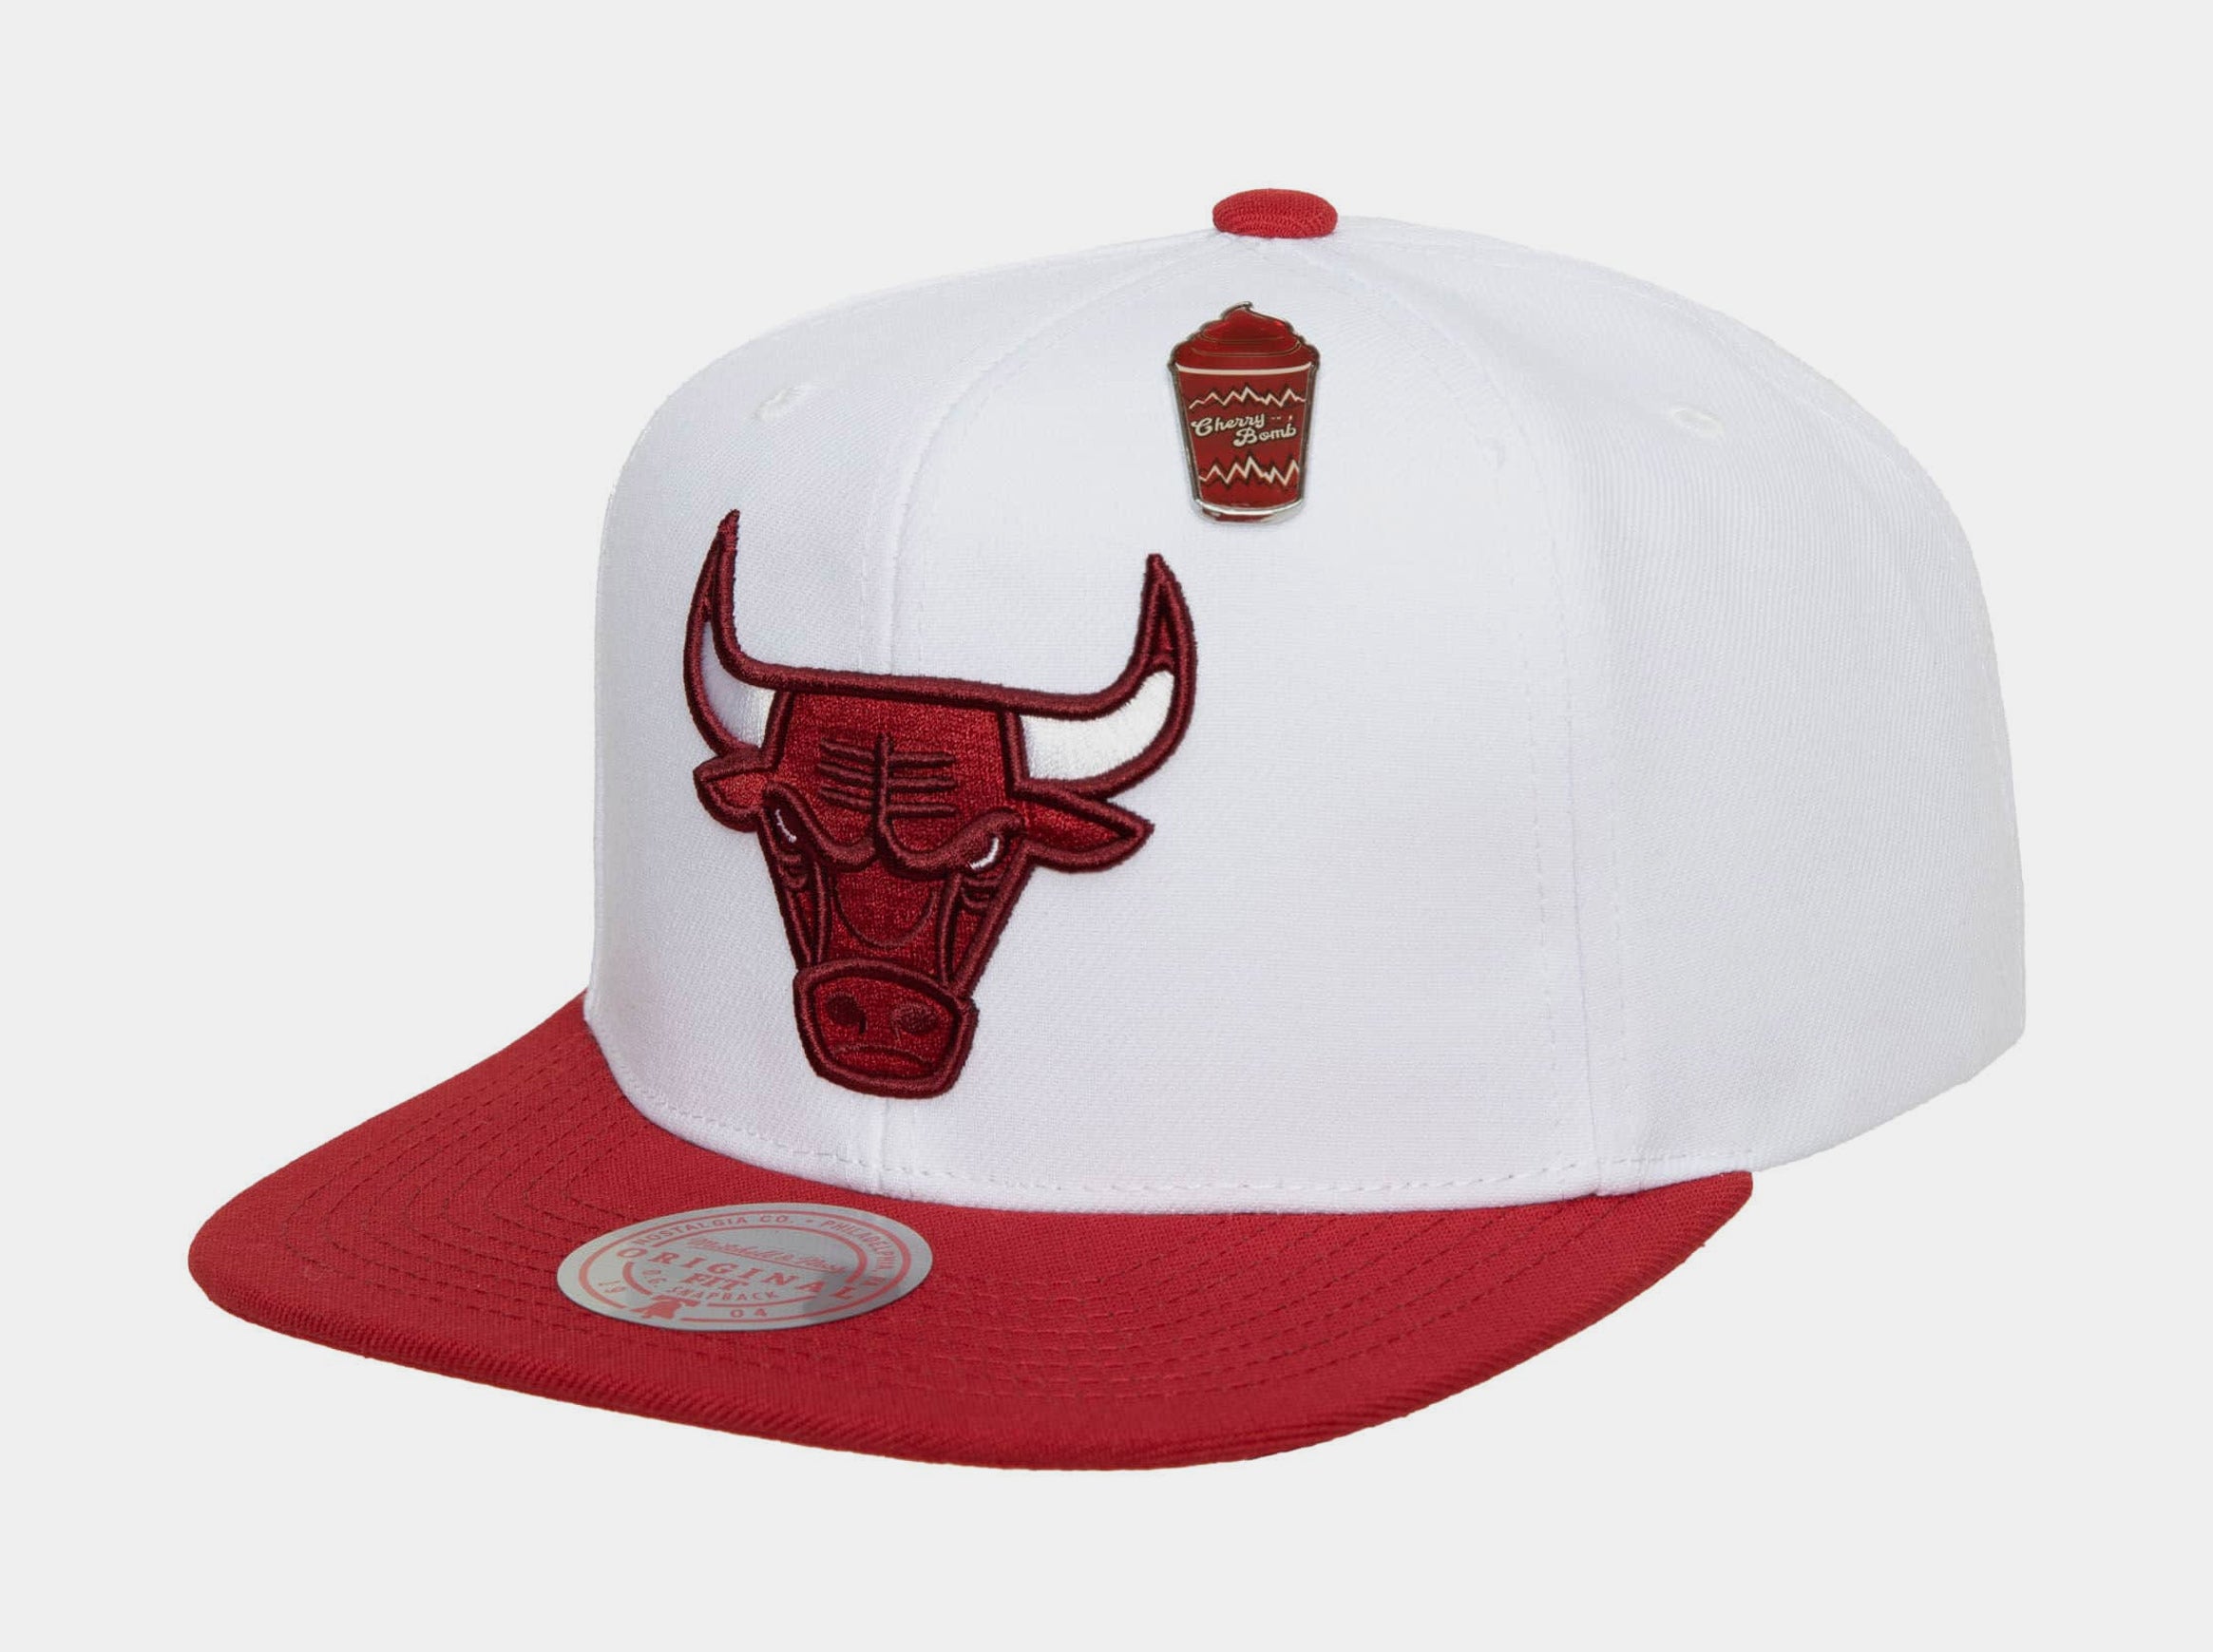 Mitchell & Ness Chicago Bulls Cherry Red Snapback Hat, White